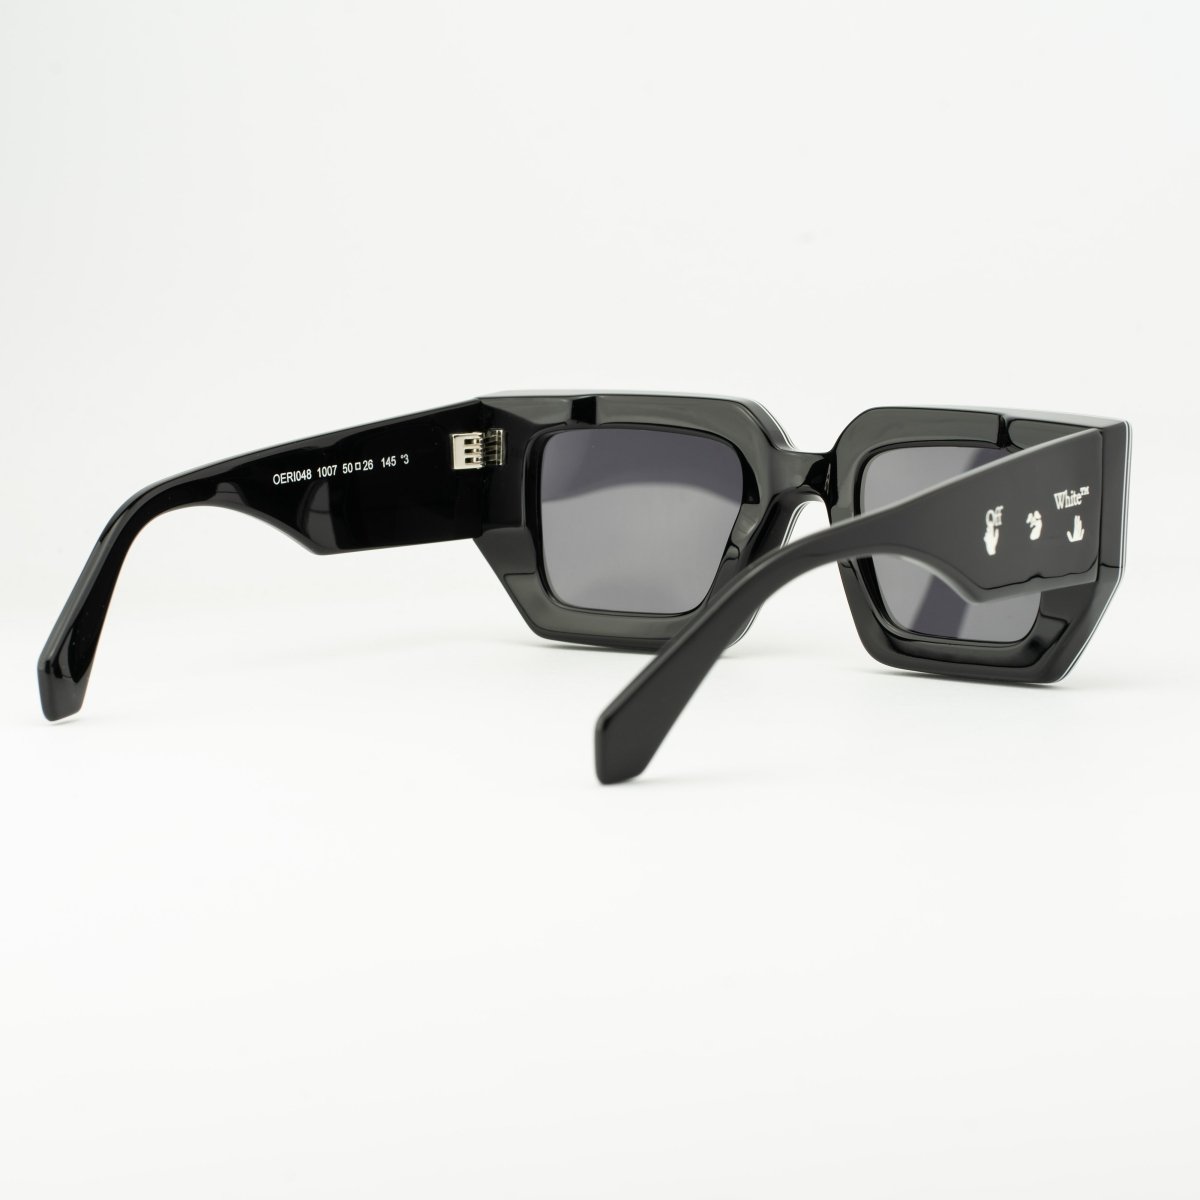 Francisco square-frame sunglasses in grey